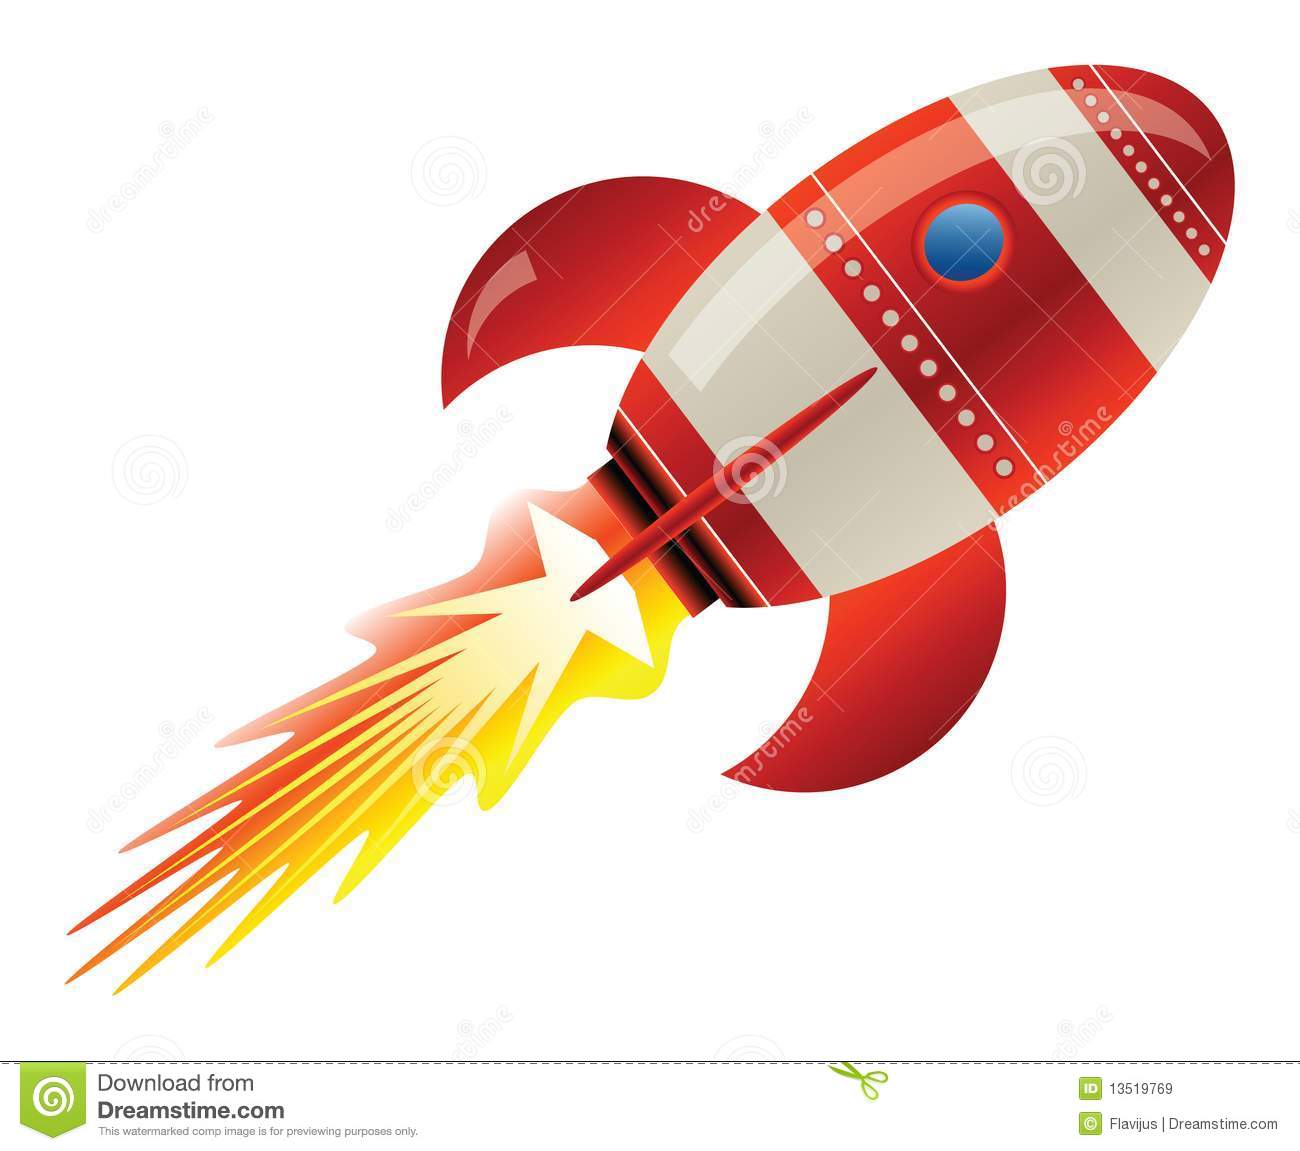 Stylized Illustration Of A Retro Rocket Blasting Off Into The Sky